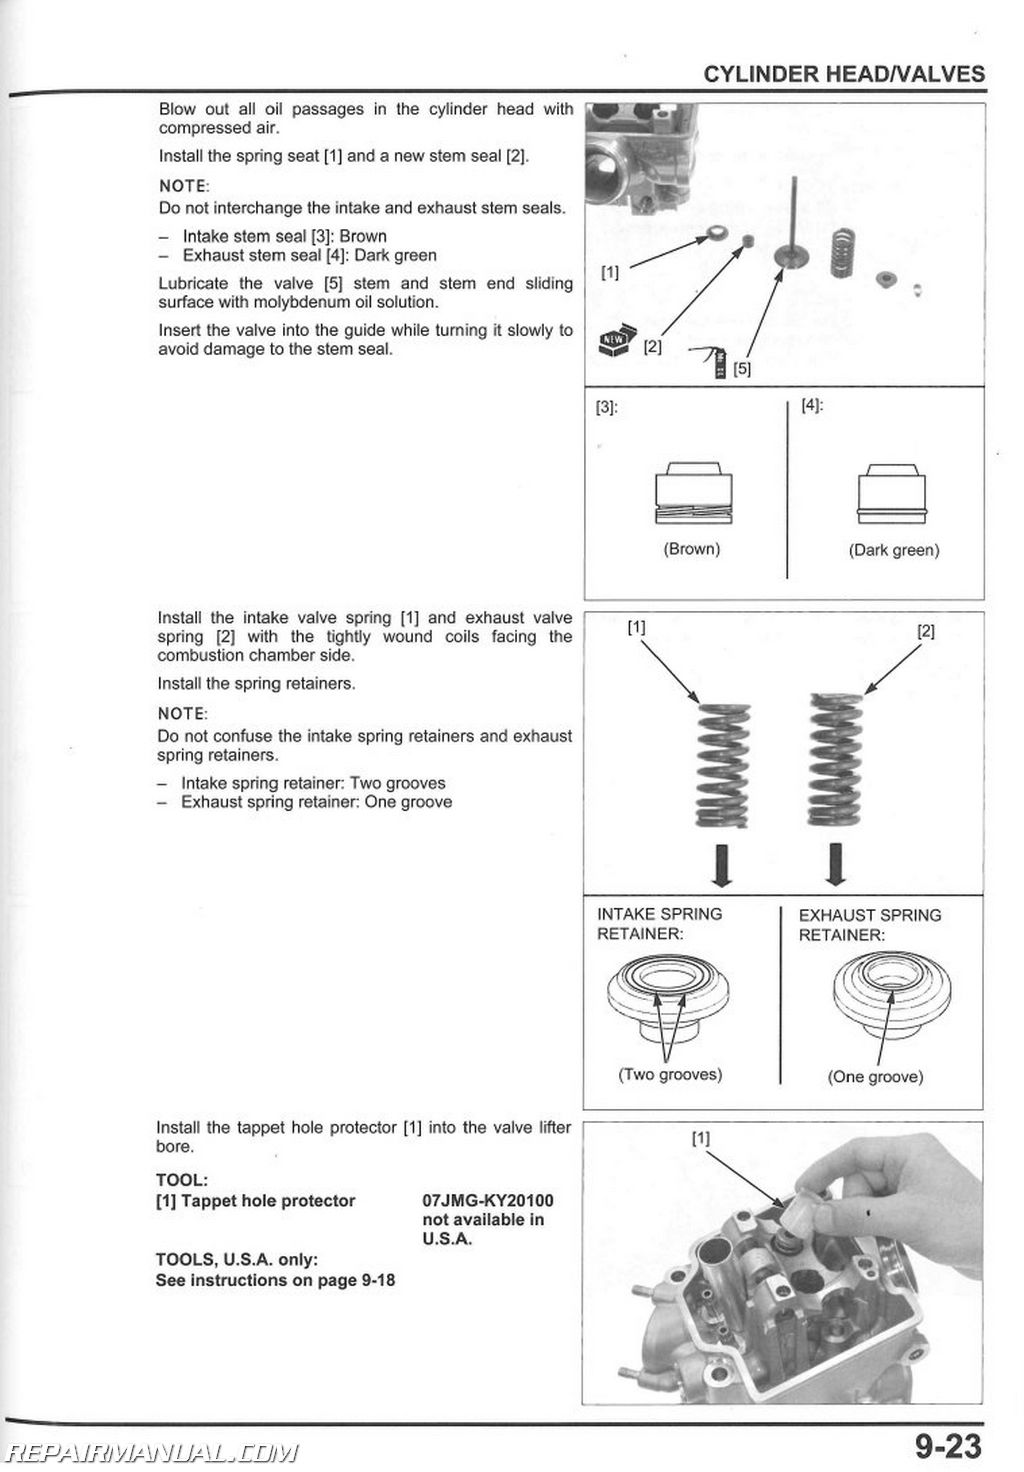 Honda Crf250 Motorcycle Electrical Wiring Diagram from www.repairmanual.com